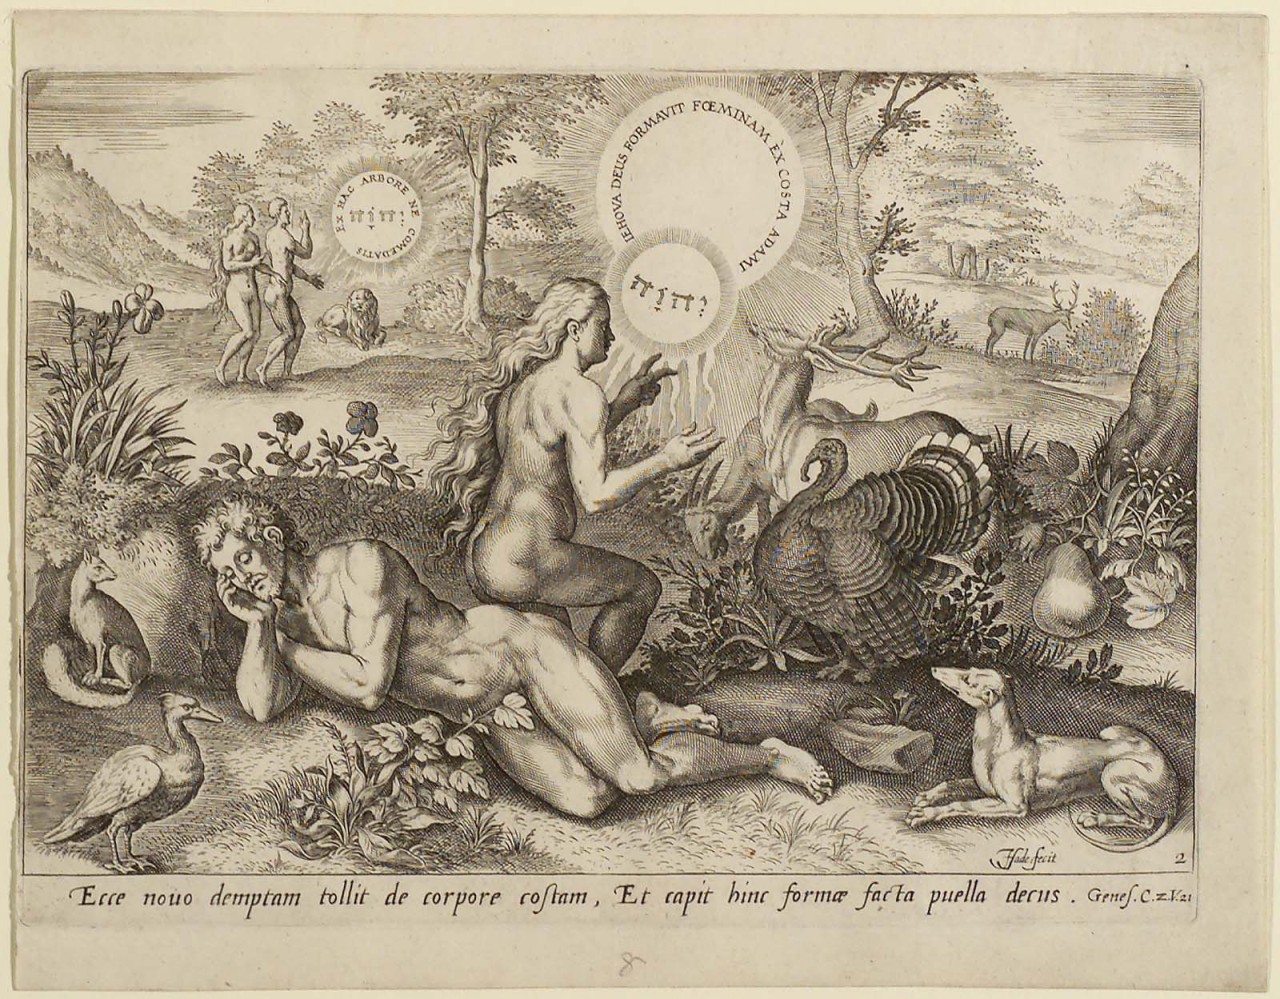 centuriespast:
“ Creation of Eve
before 1585
Johannes Sadeler (Netherlandish, 1550–about 1600)
MFA Boston
”